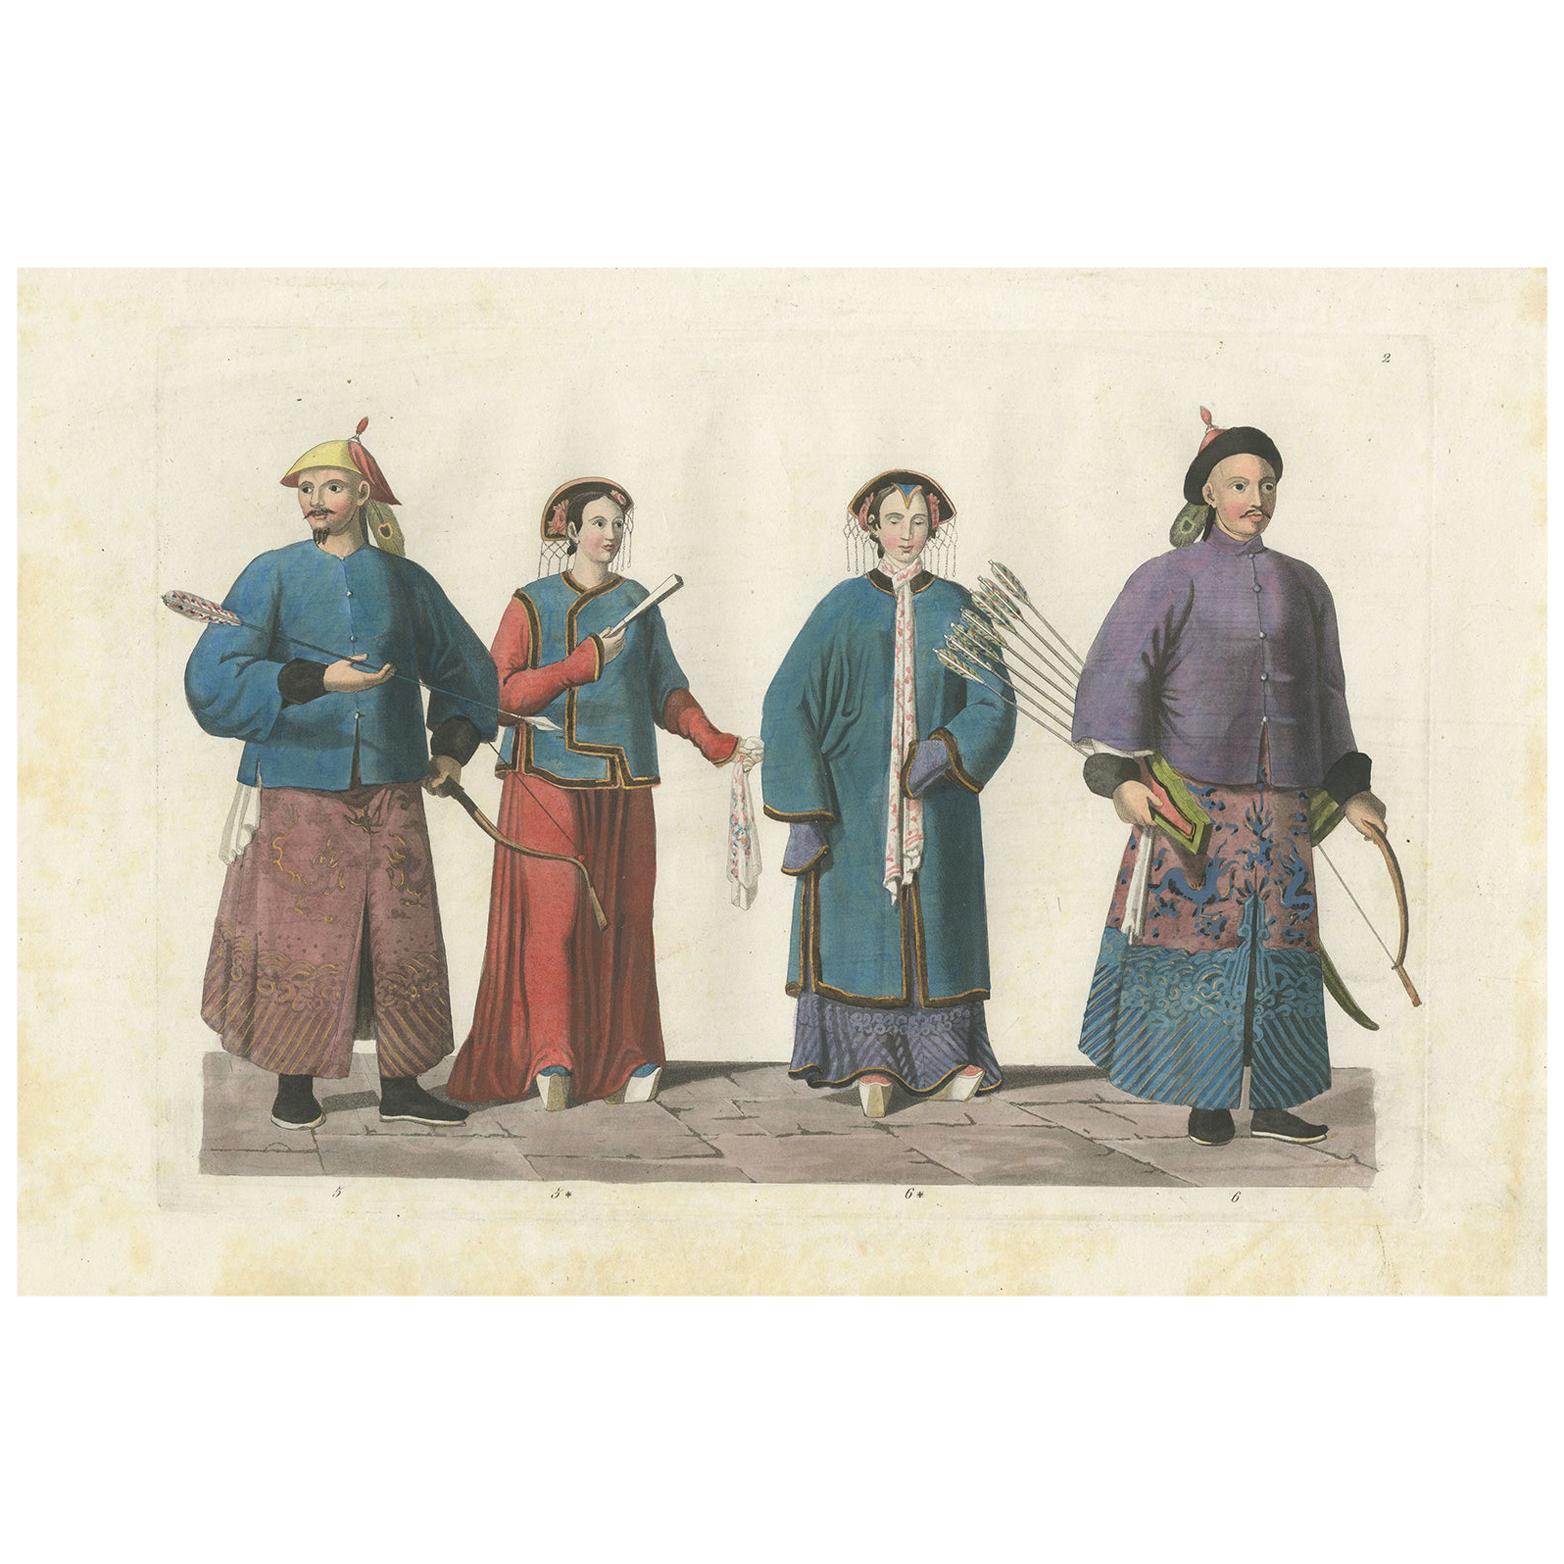 Antique Print of Military Mandarins by Ferrario '1831'